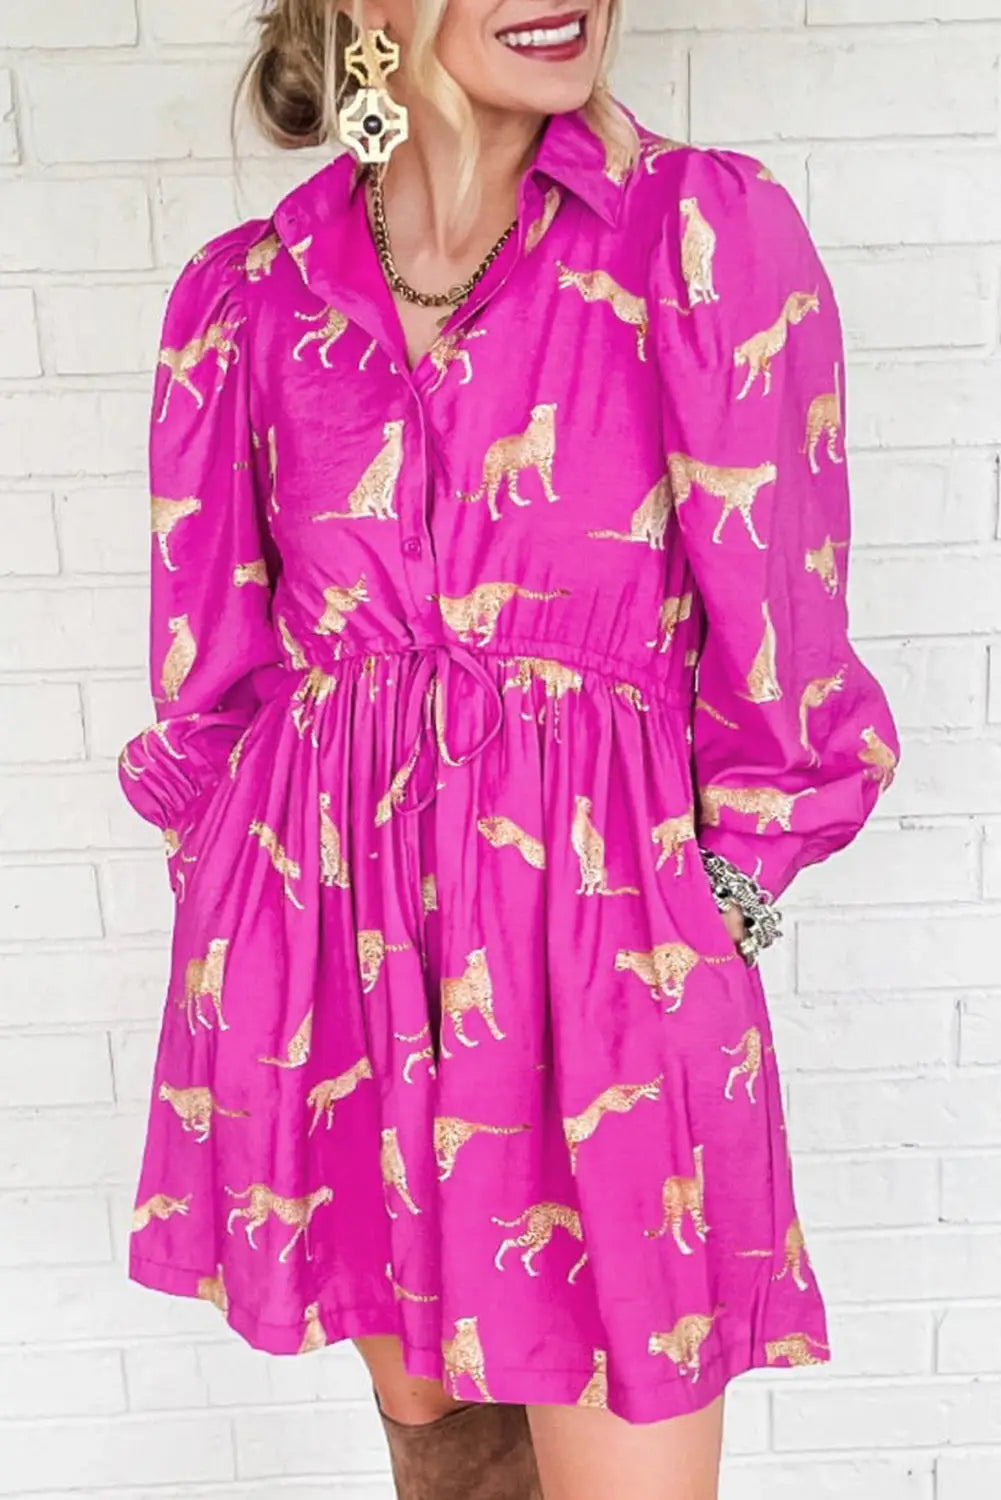 Rose cheetah print drawstring tunic shirt dress - s / 100% viscose - mini dresses